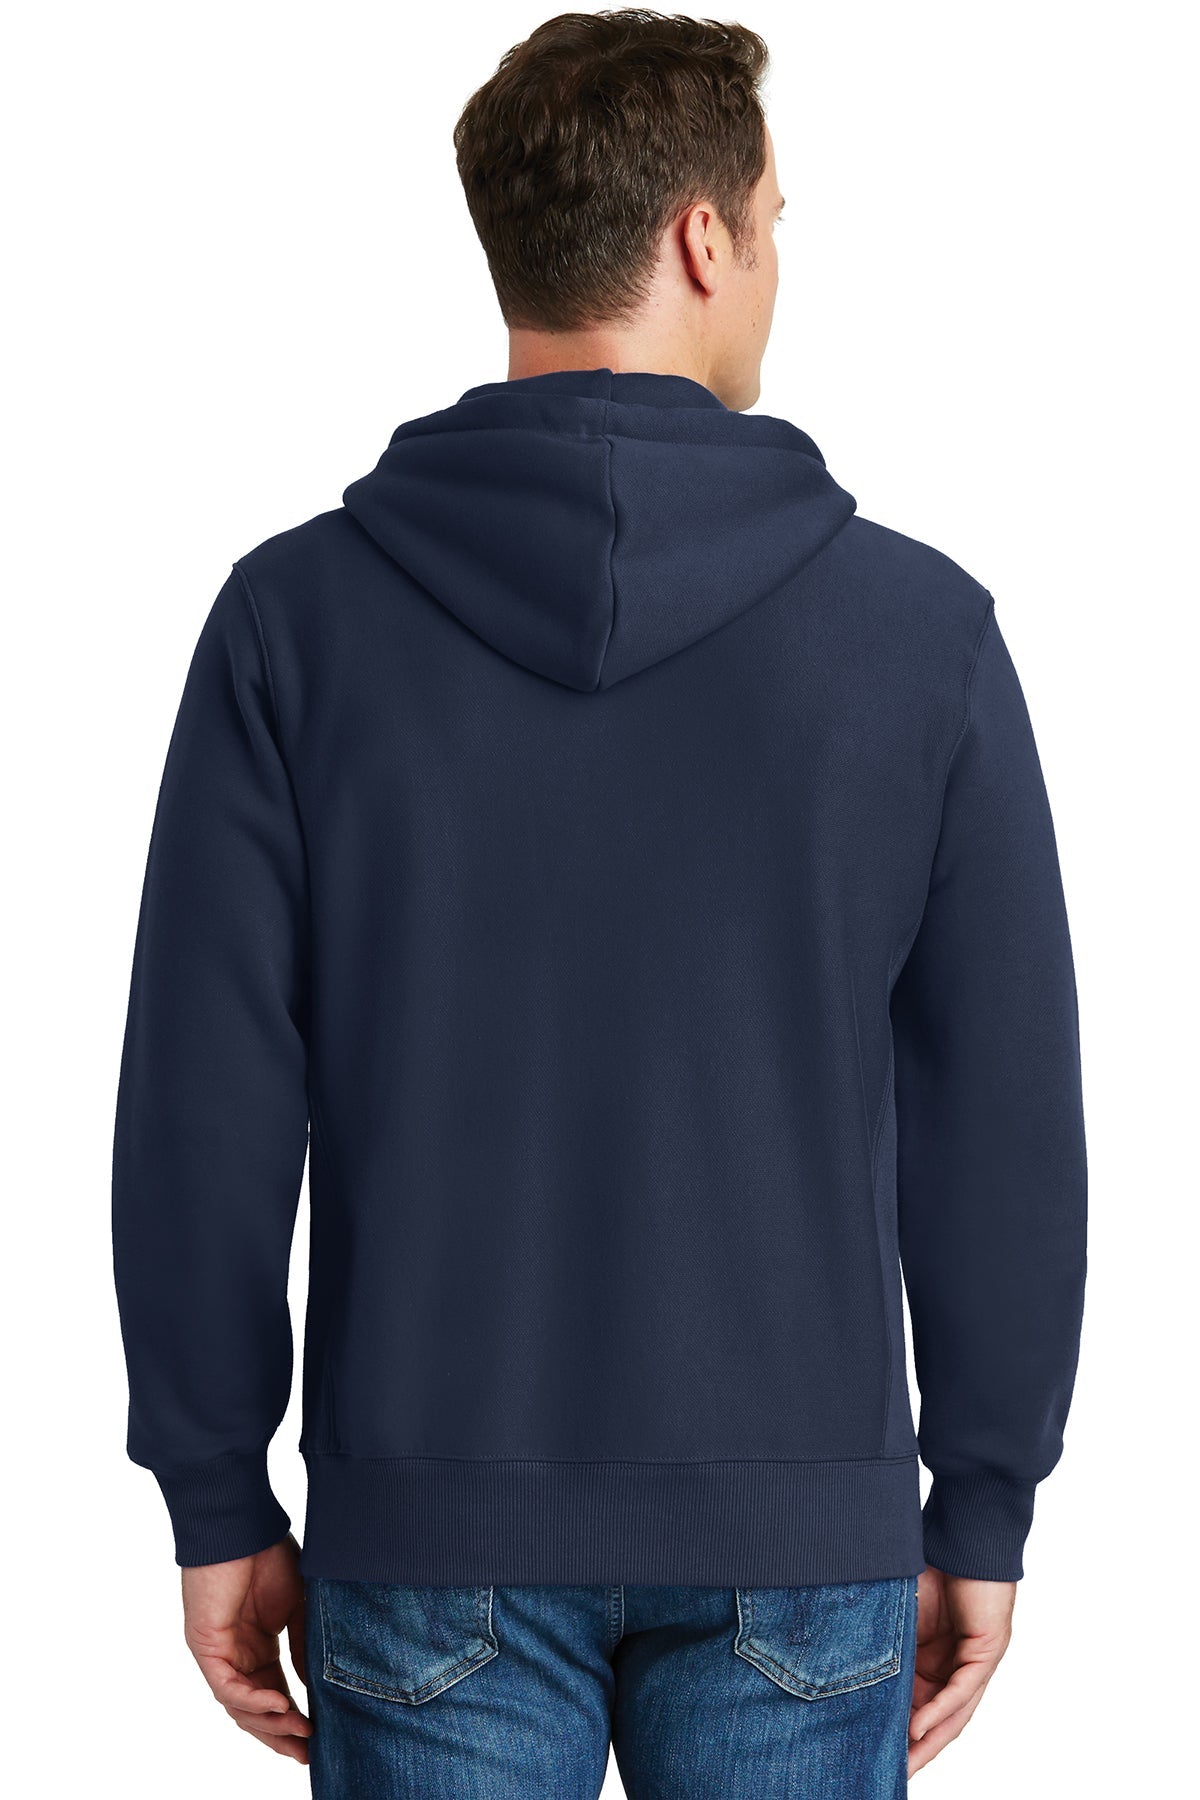 sport-tek_f282 _true navy_company_logo_sweatshirts